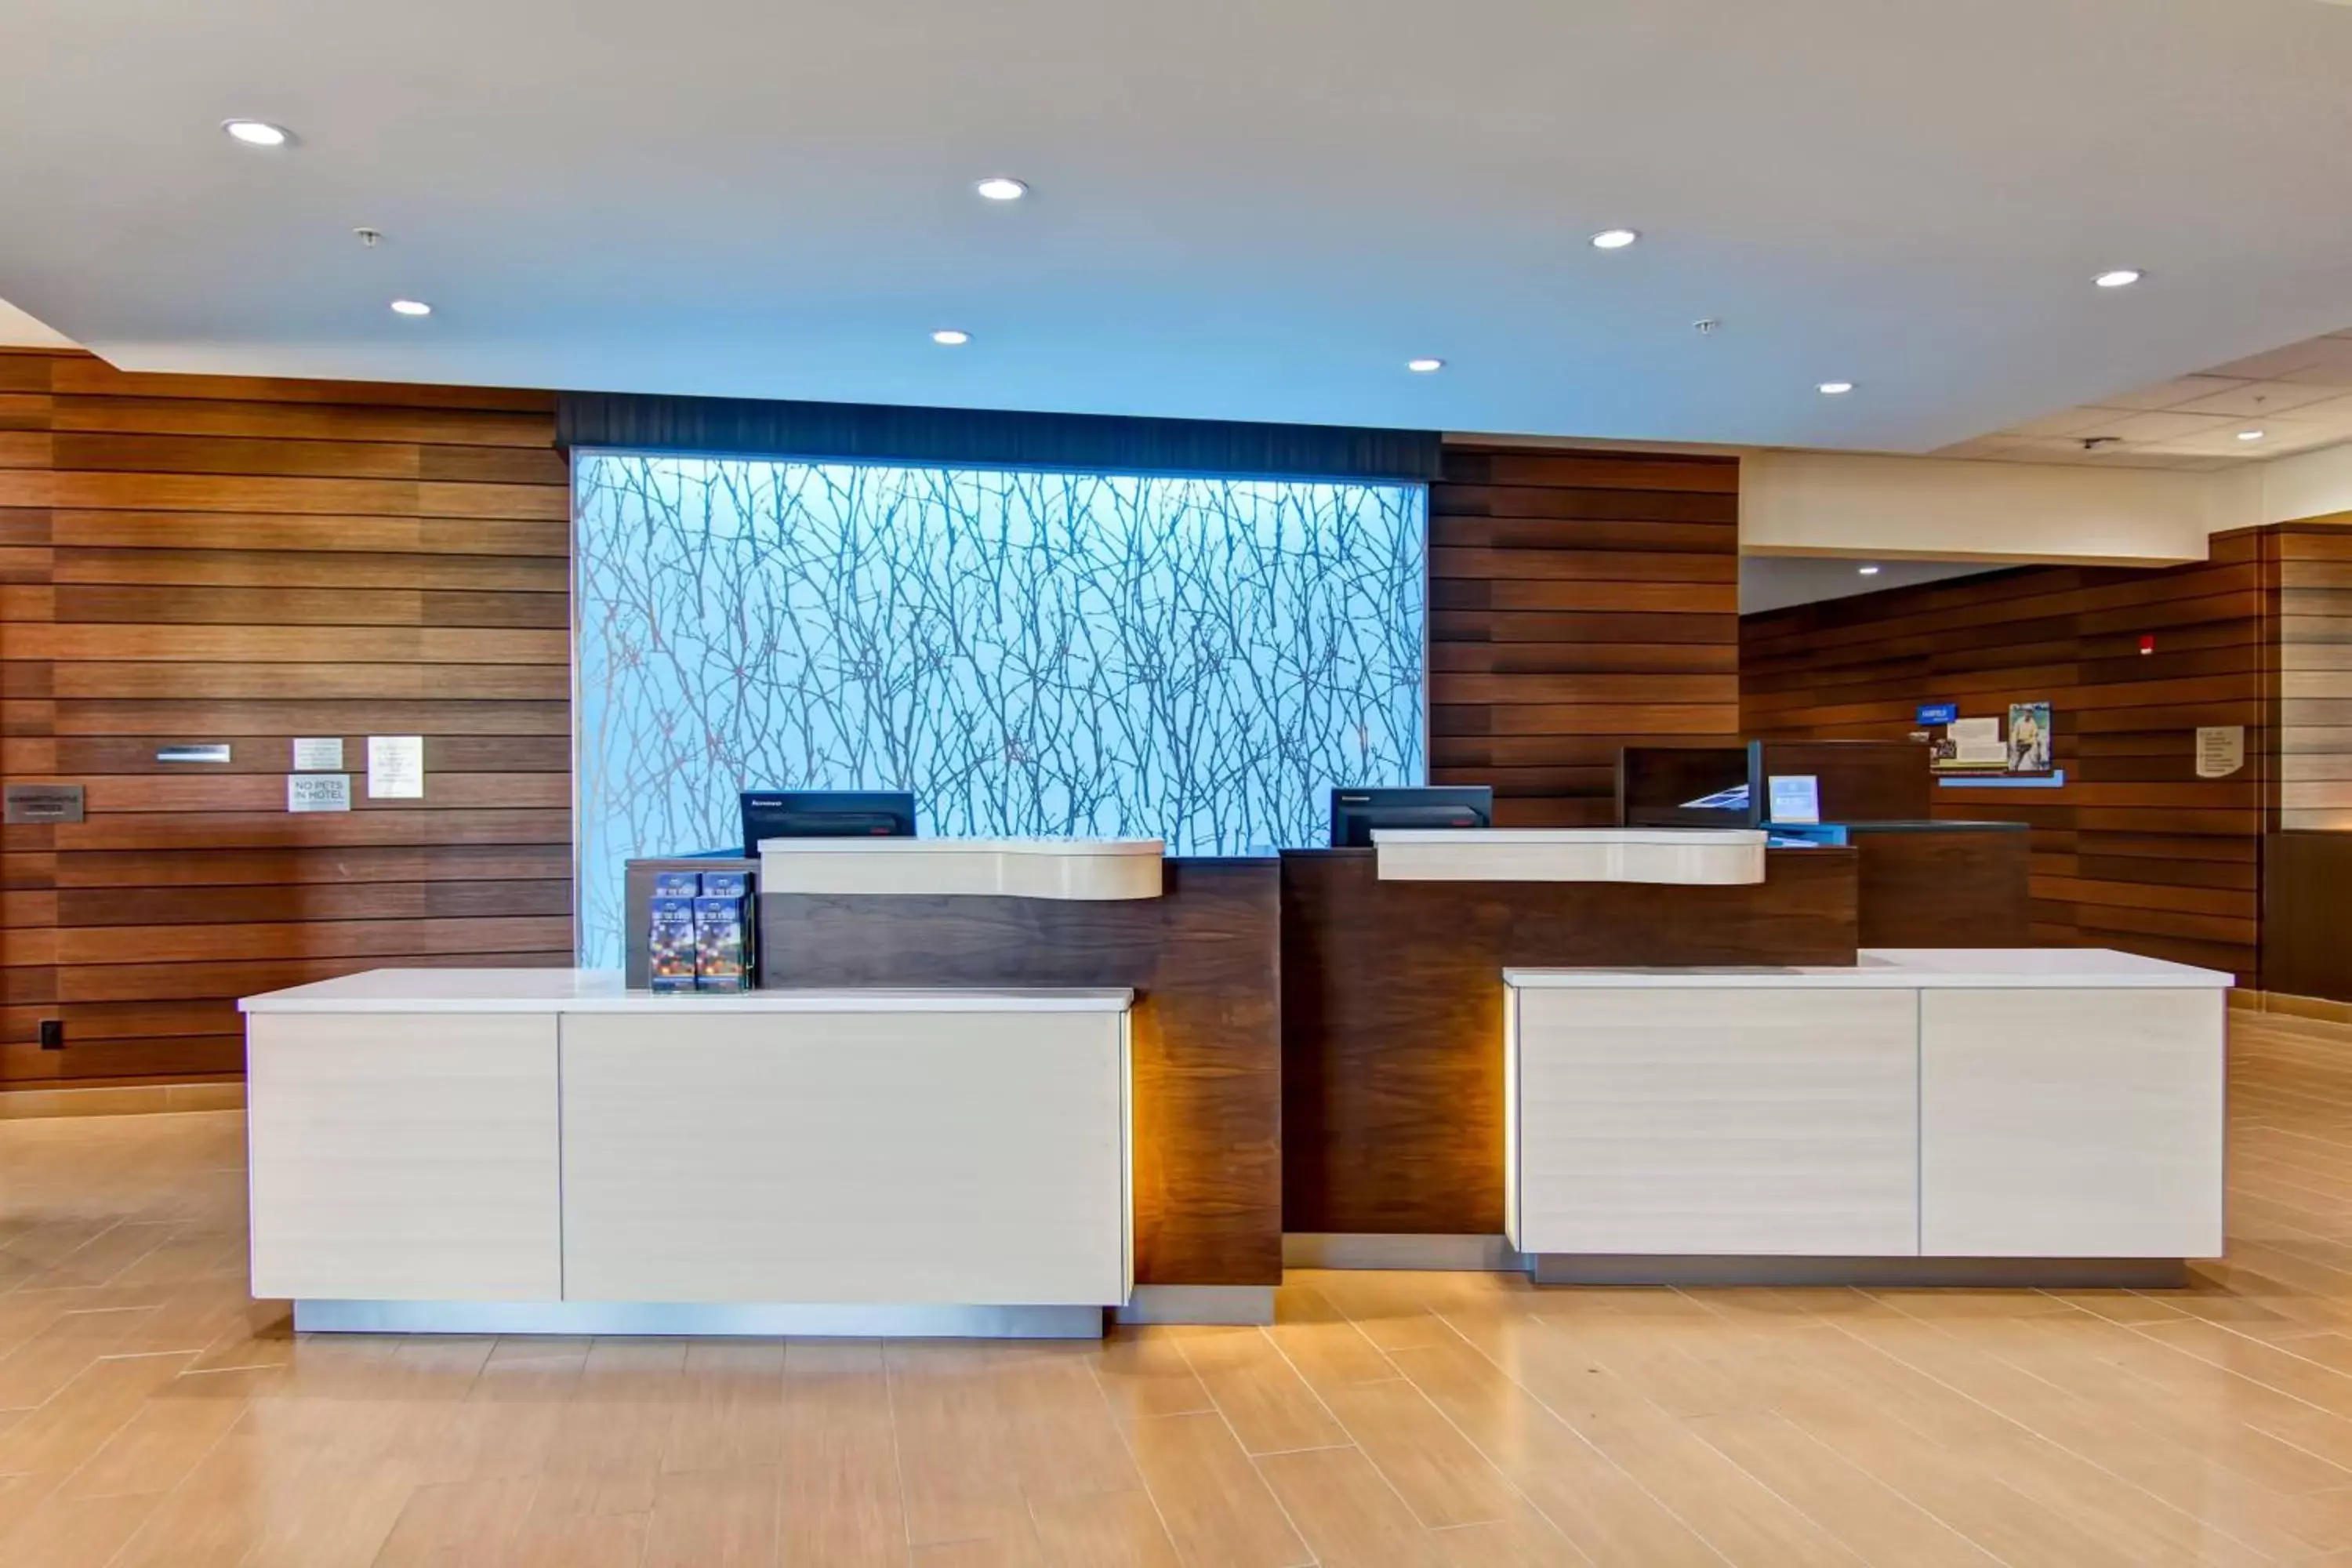 Lobby or reception, Lobby/Reception in Fairfield Inn & Suites by Marriott Kamloops